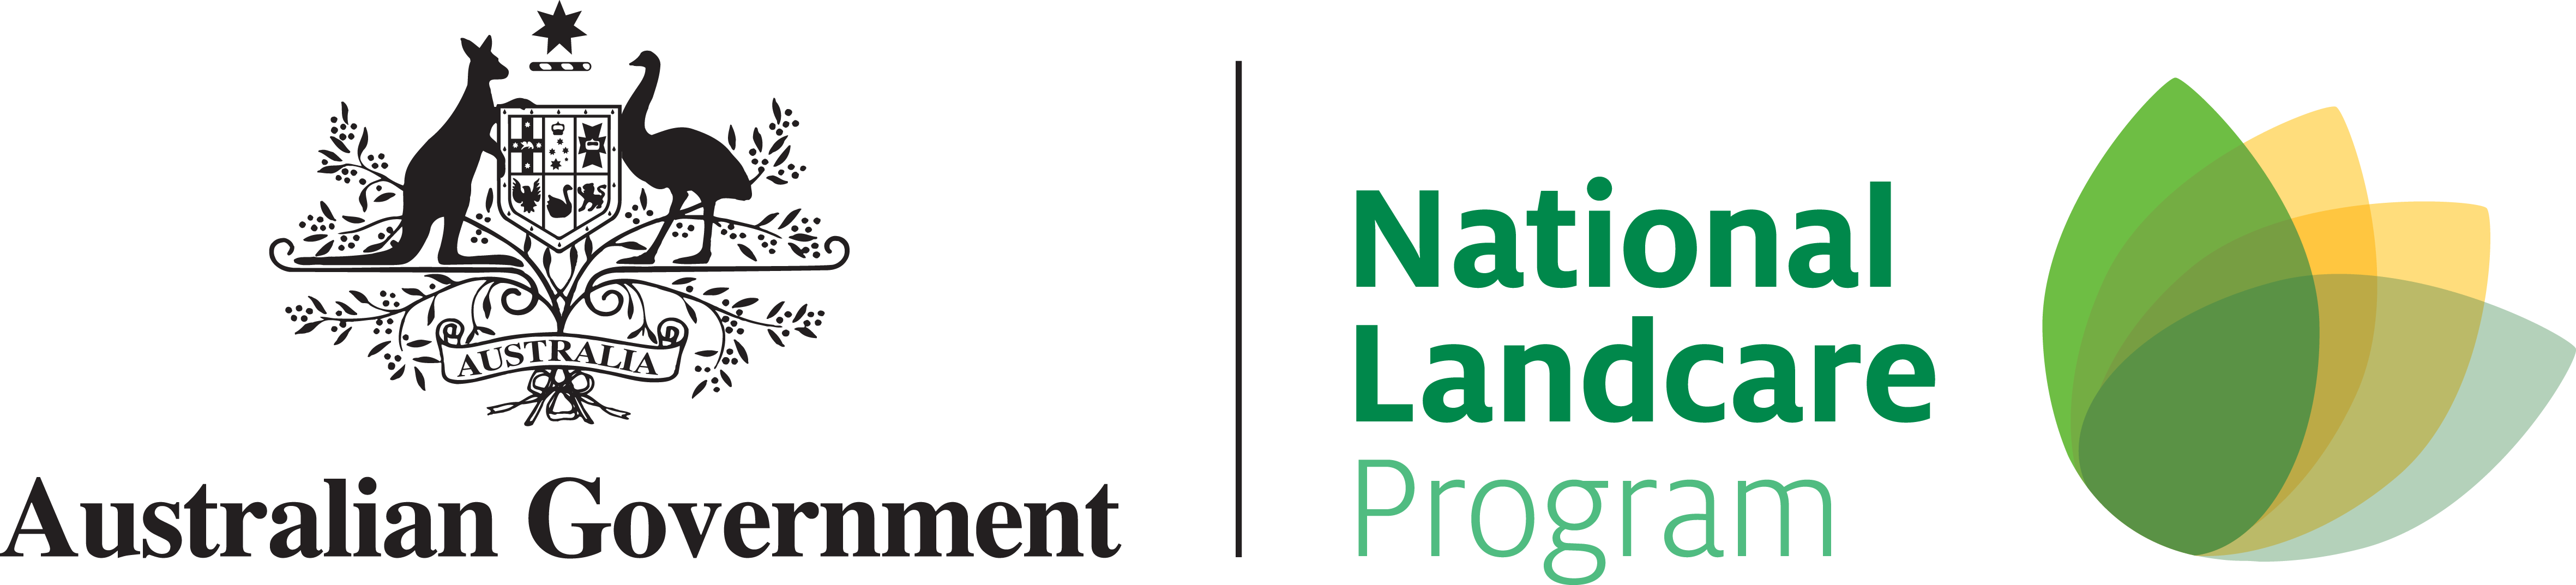 Australian Government National Landcare Program Logo